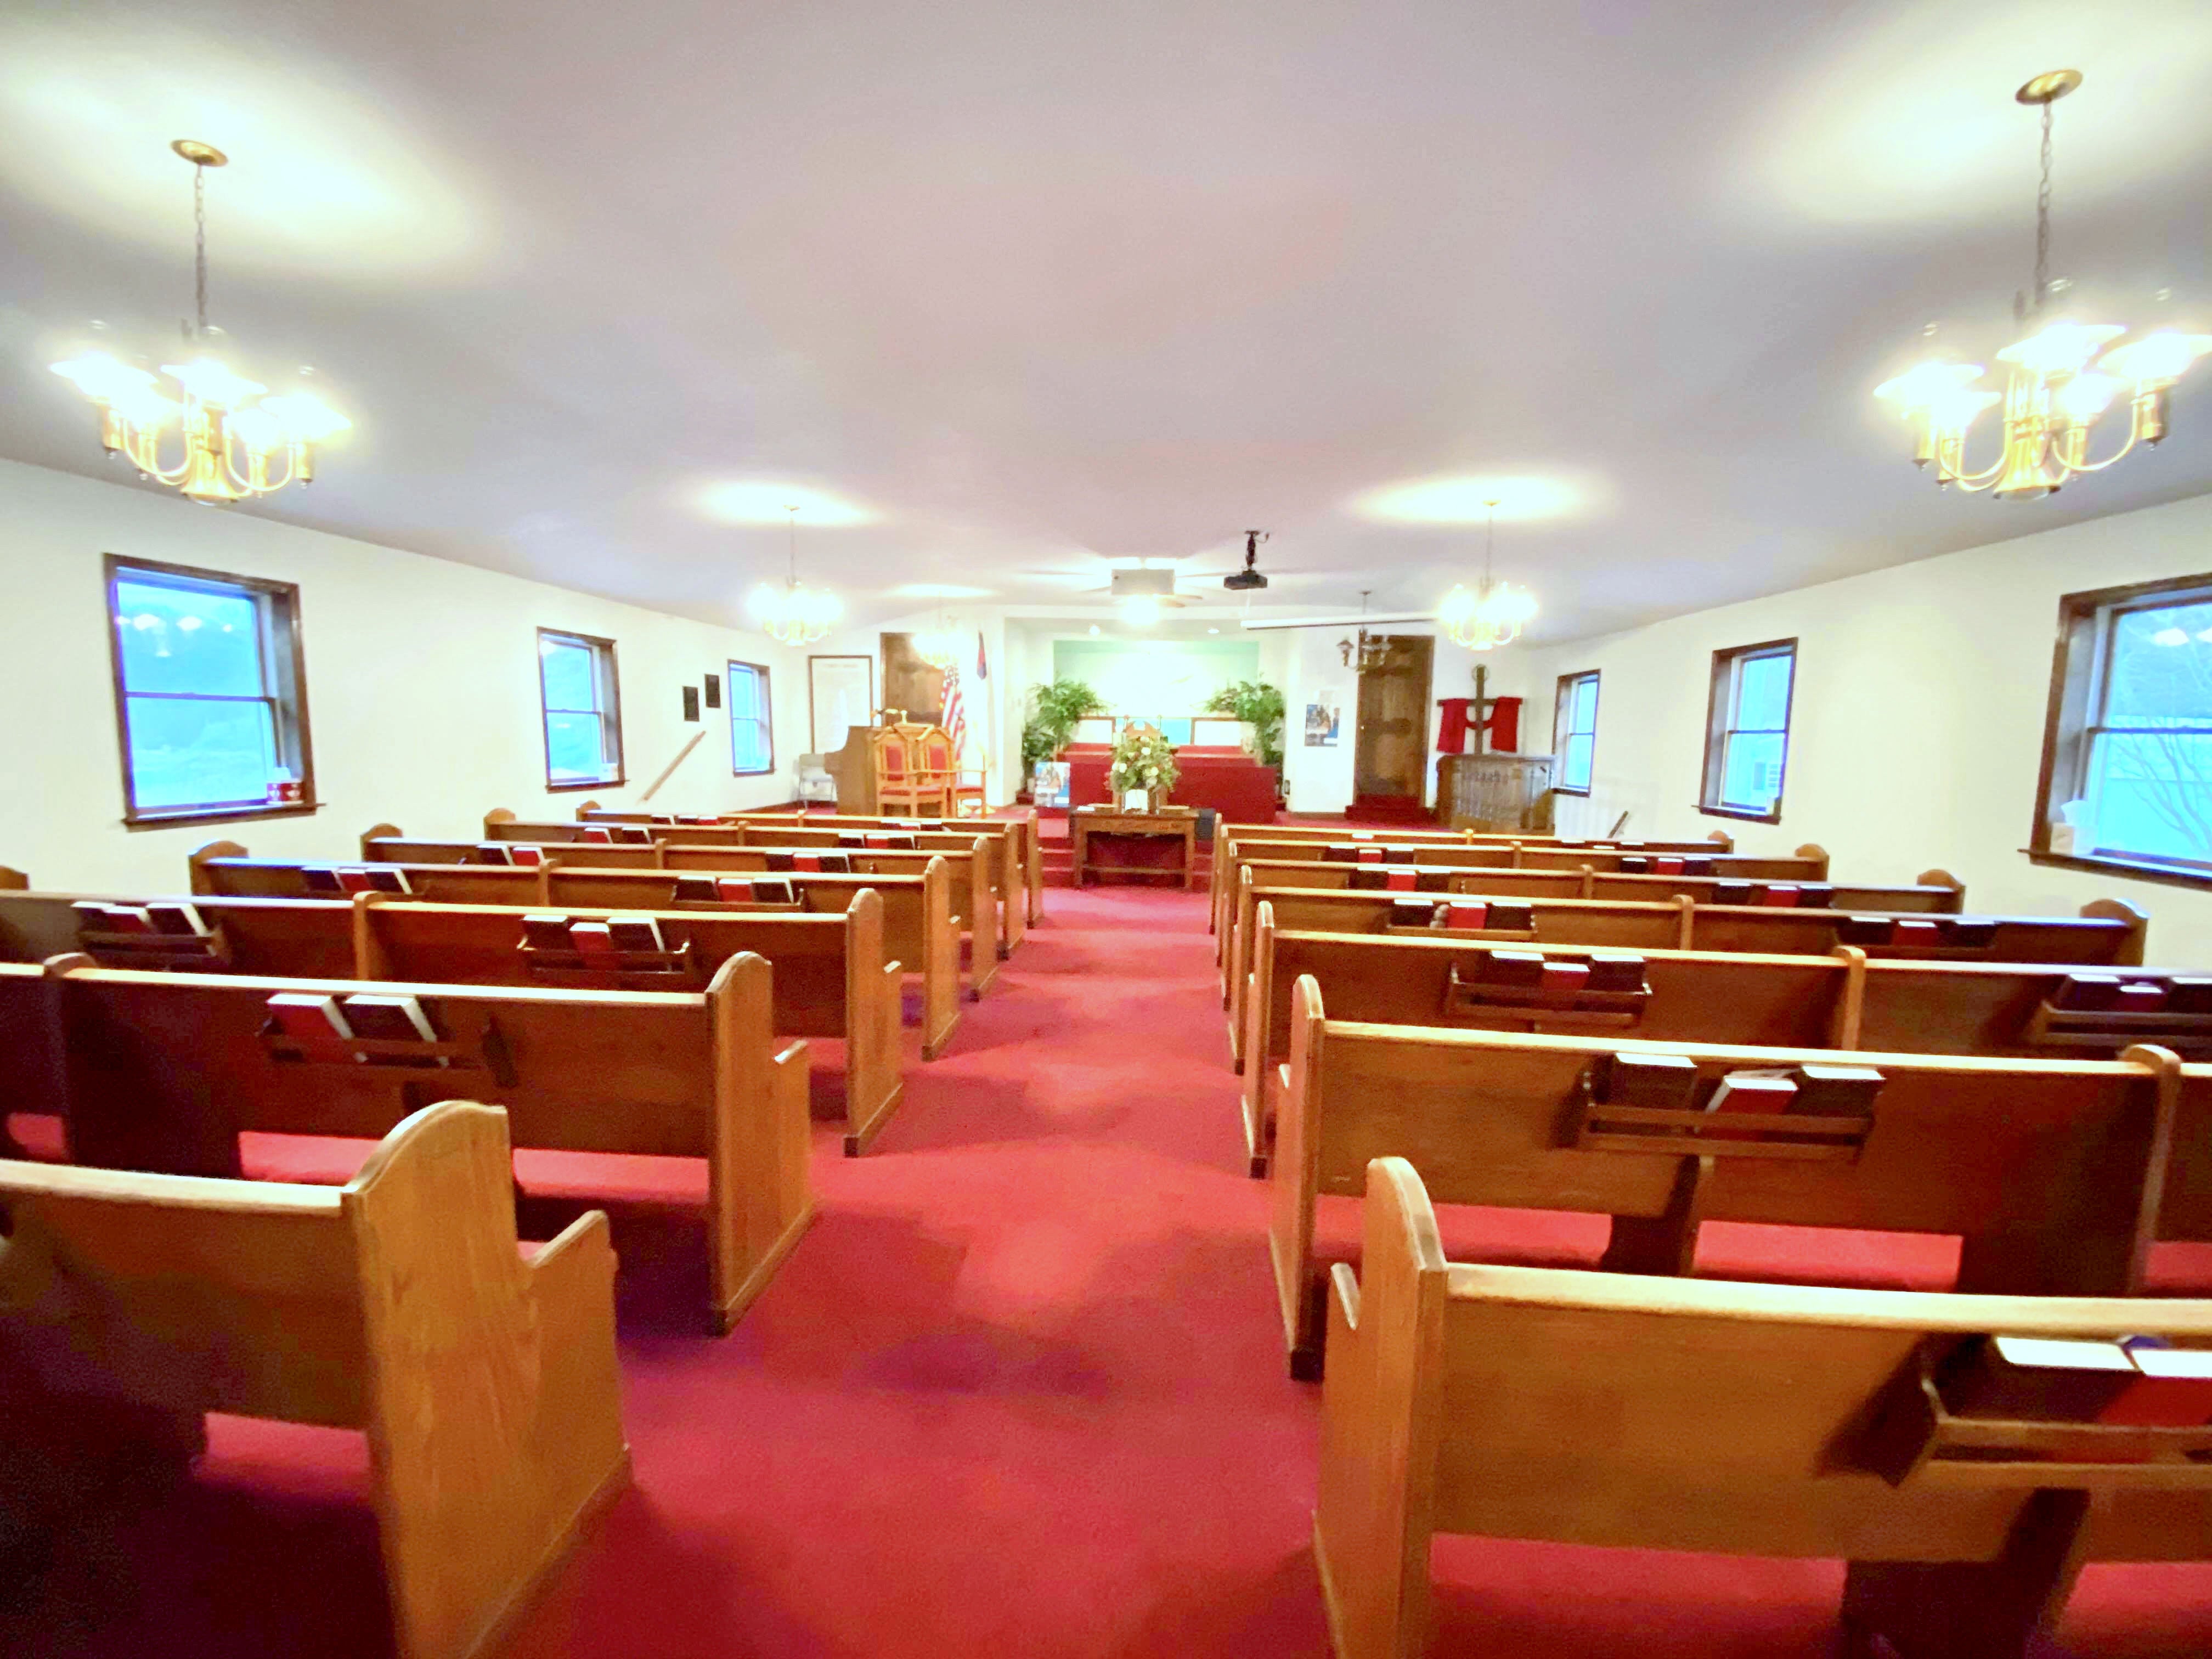 Empty church image